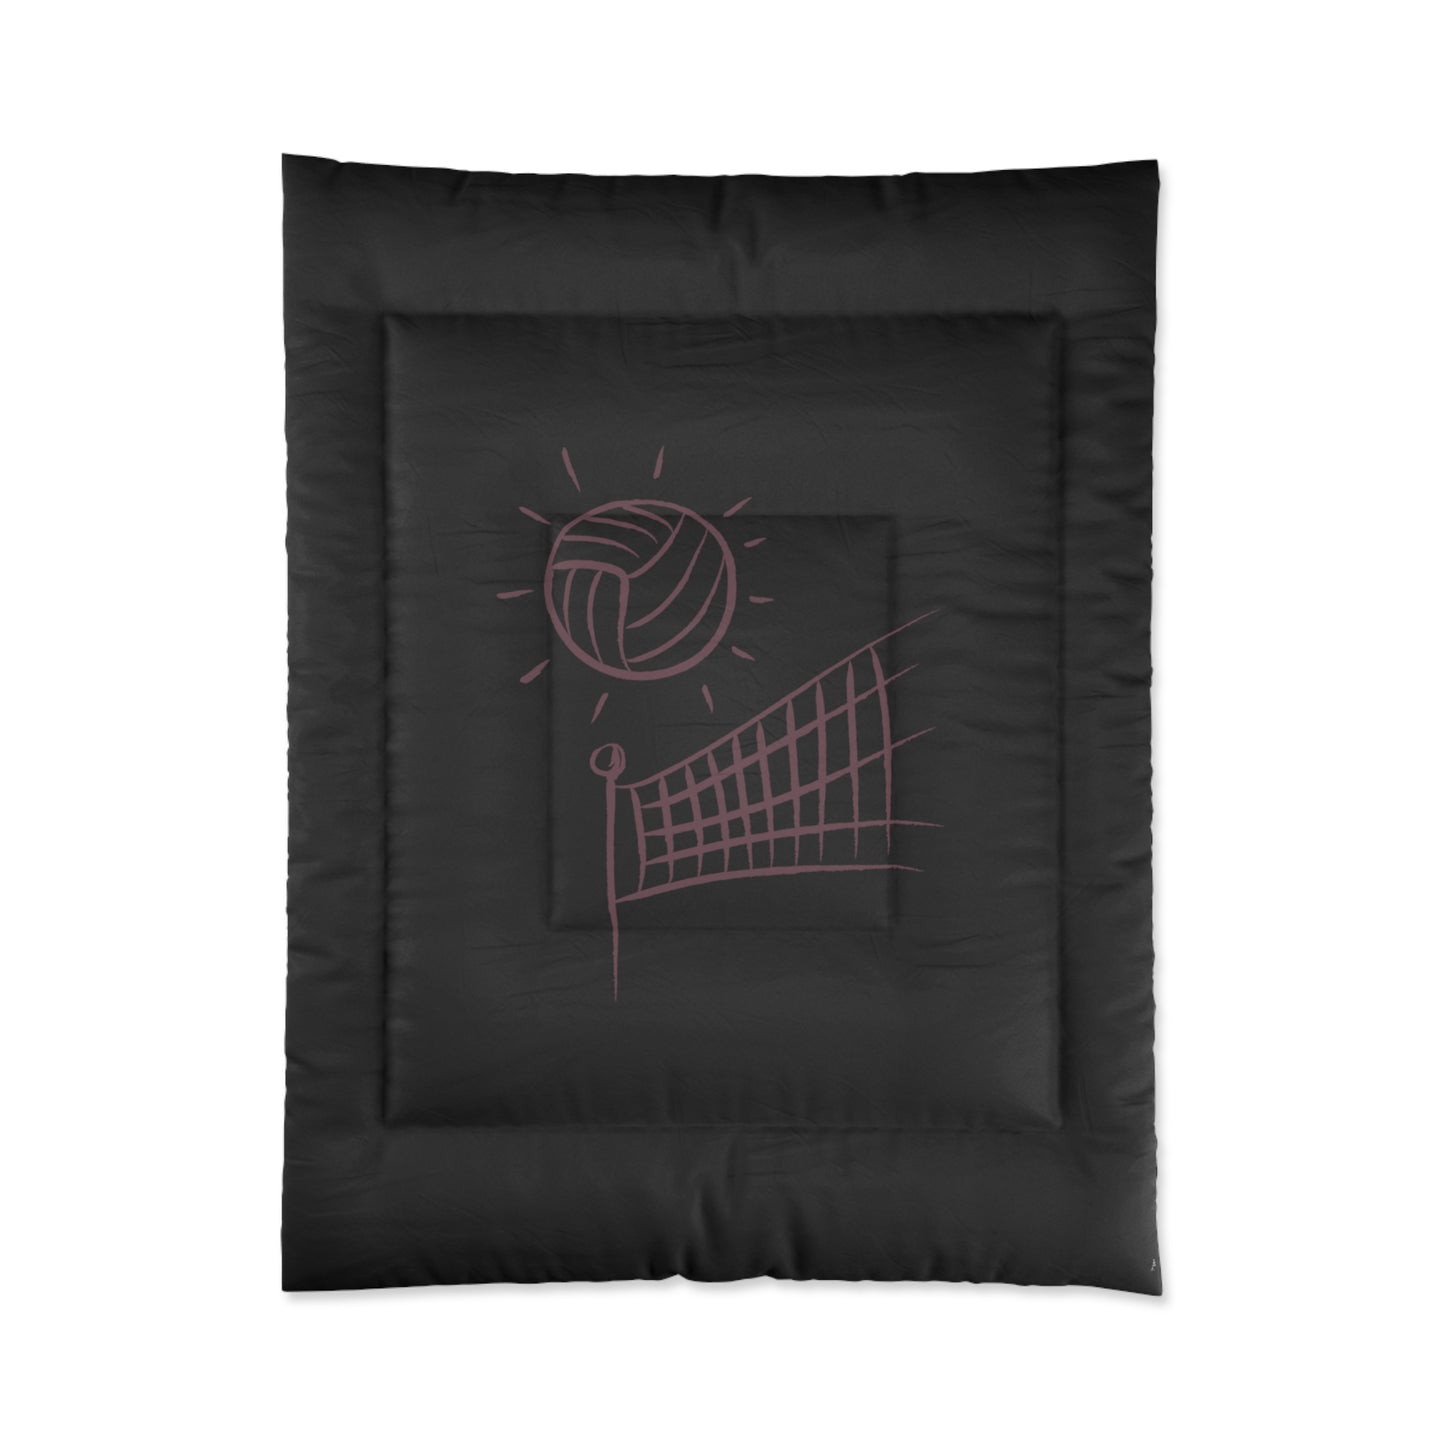 Comforter: Volleyball Black